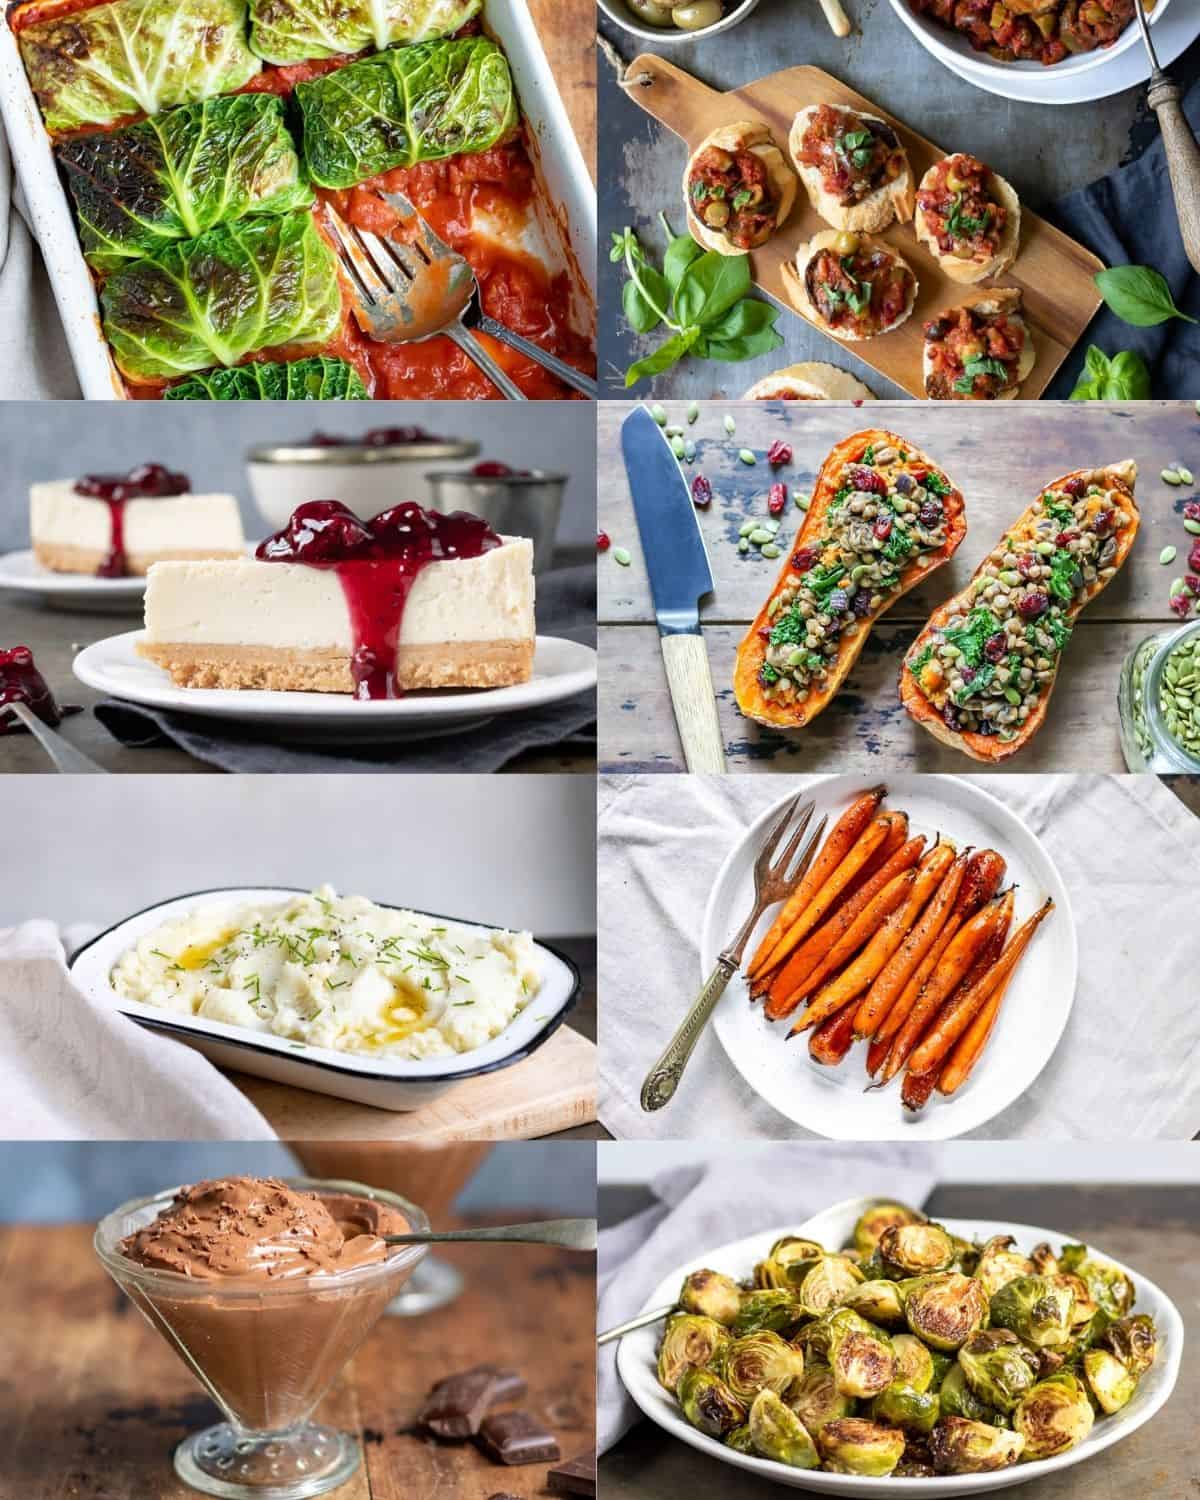 Collage of vegan thanksgiving recipes.